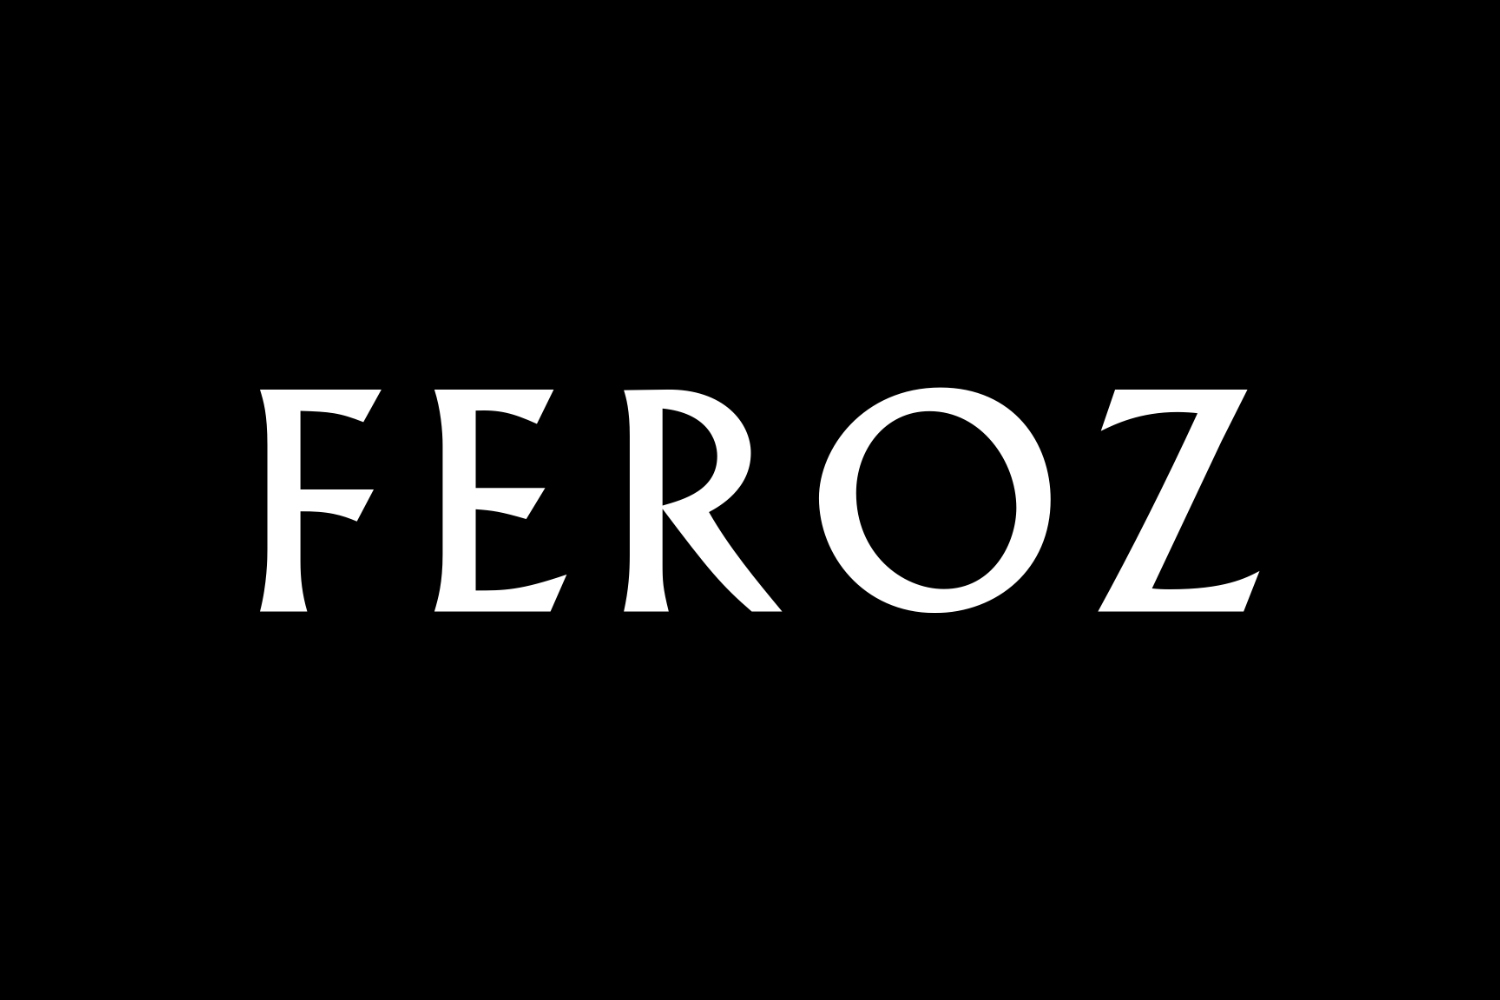 Logotype Design: Feroz by Mucho